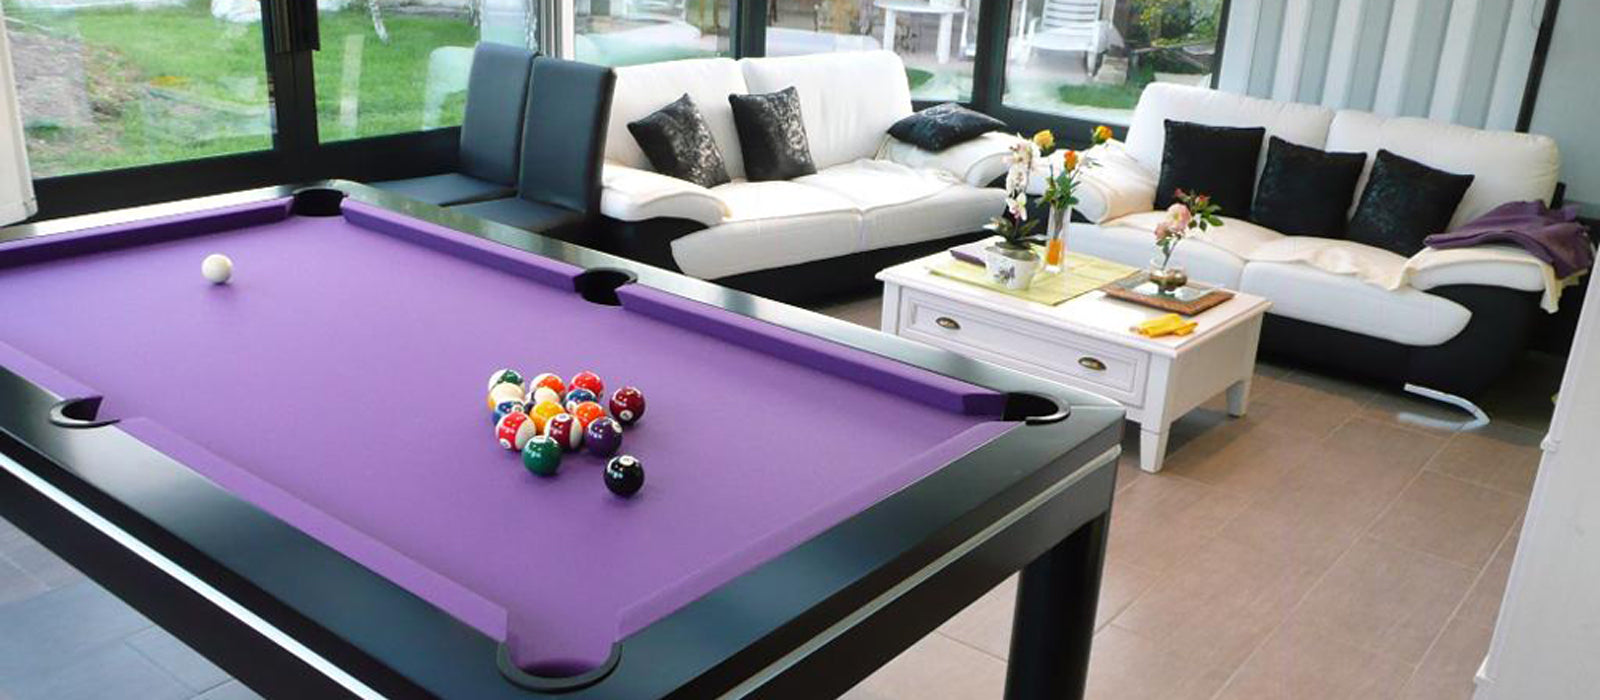 An elegant black pool table with sleek design